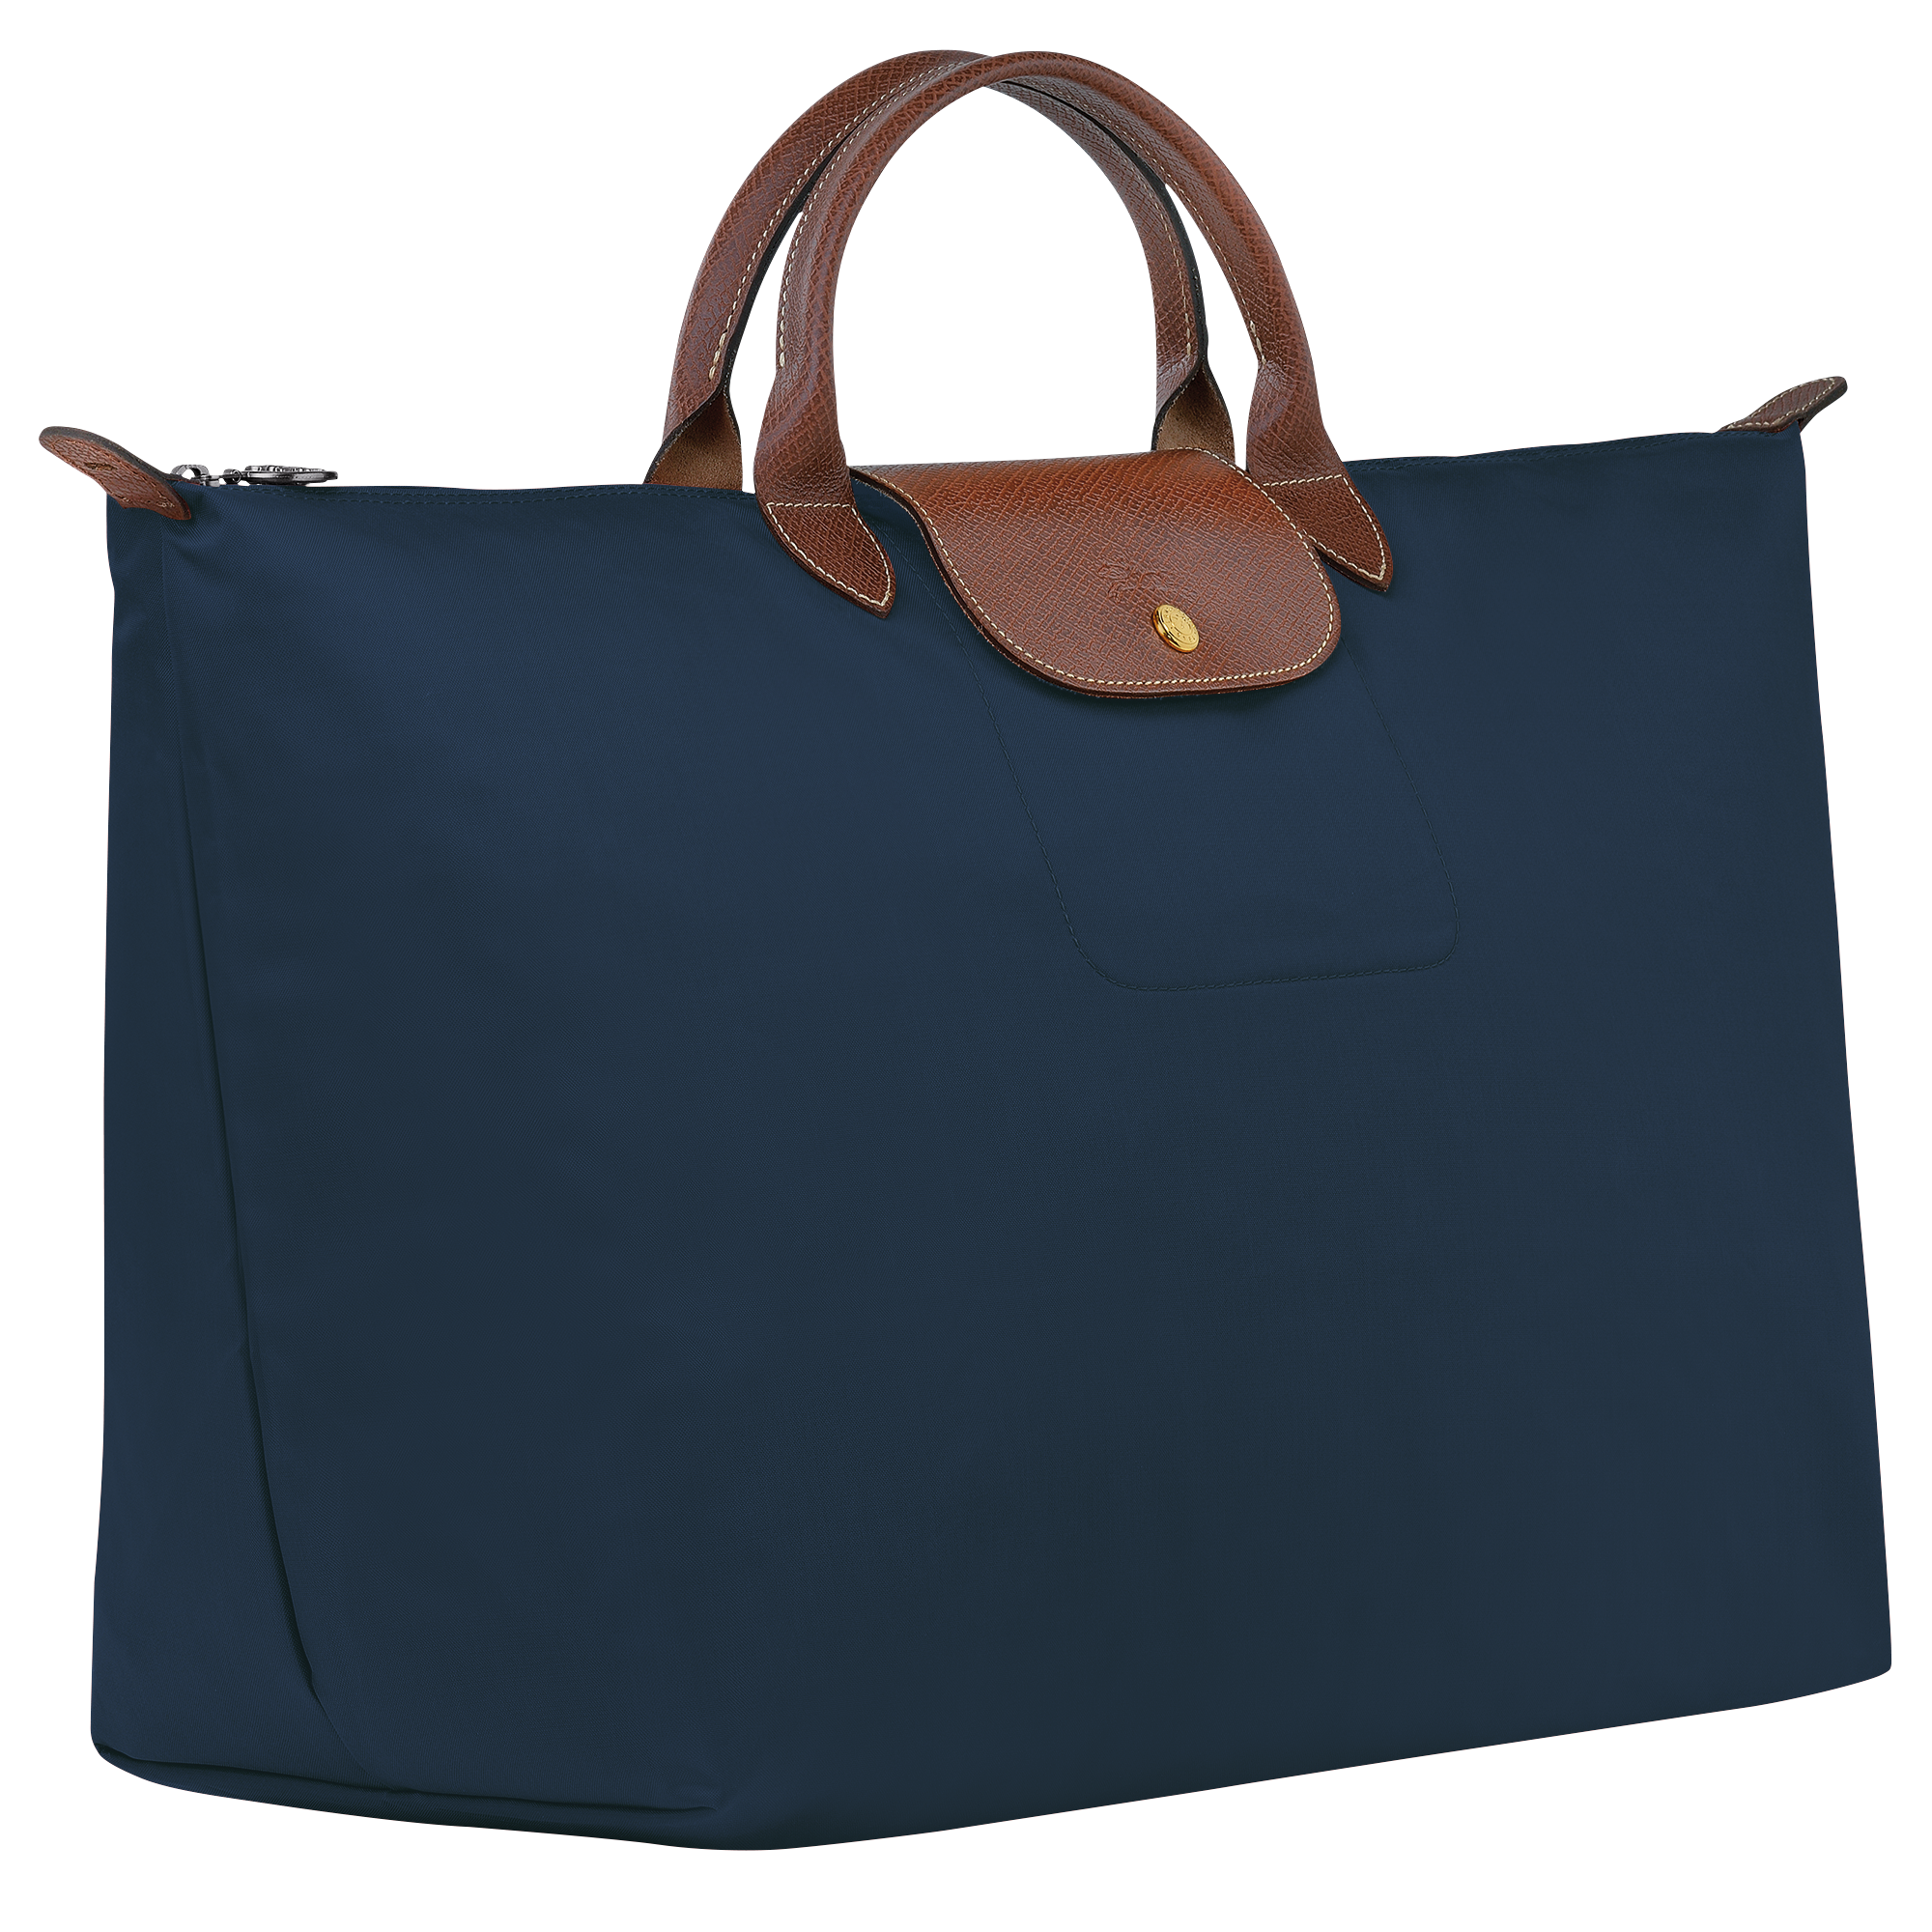 Le Pliage Original 旅行袋 S, 海軍藍